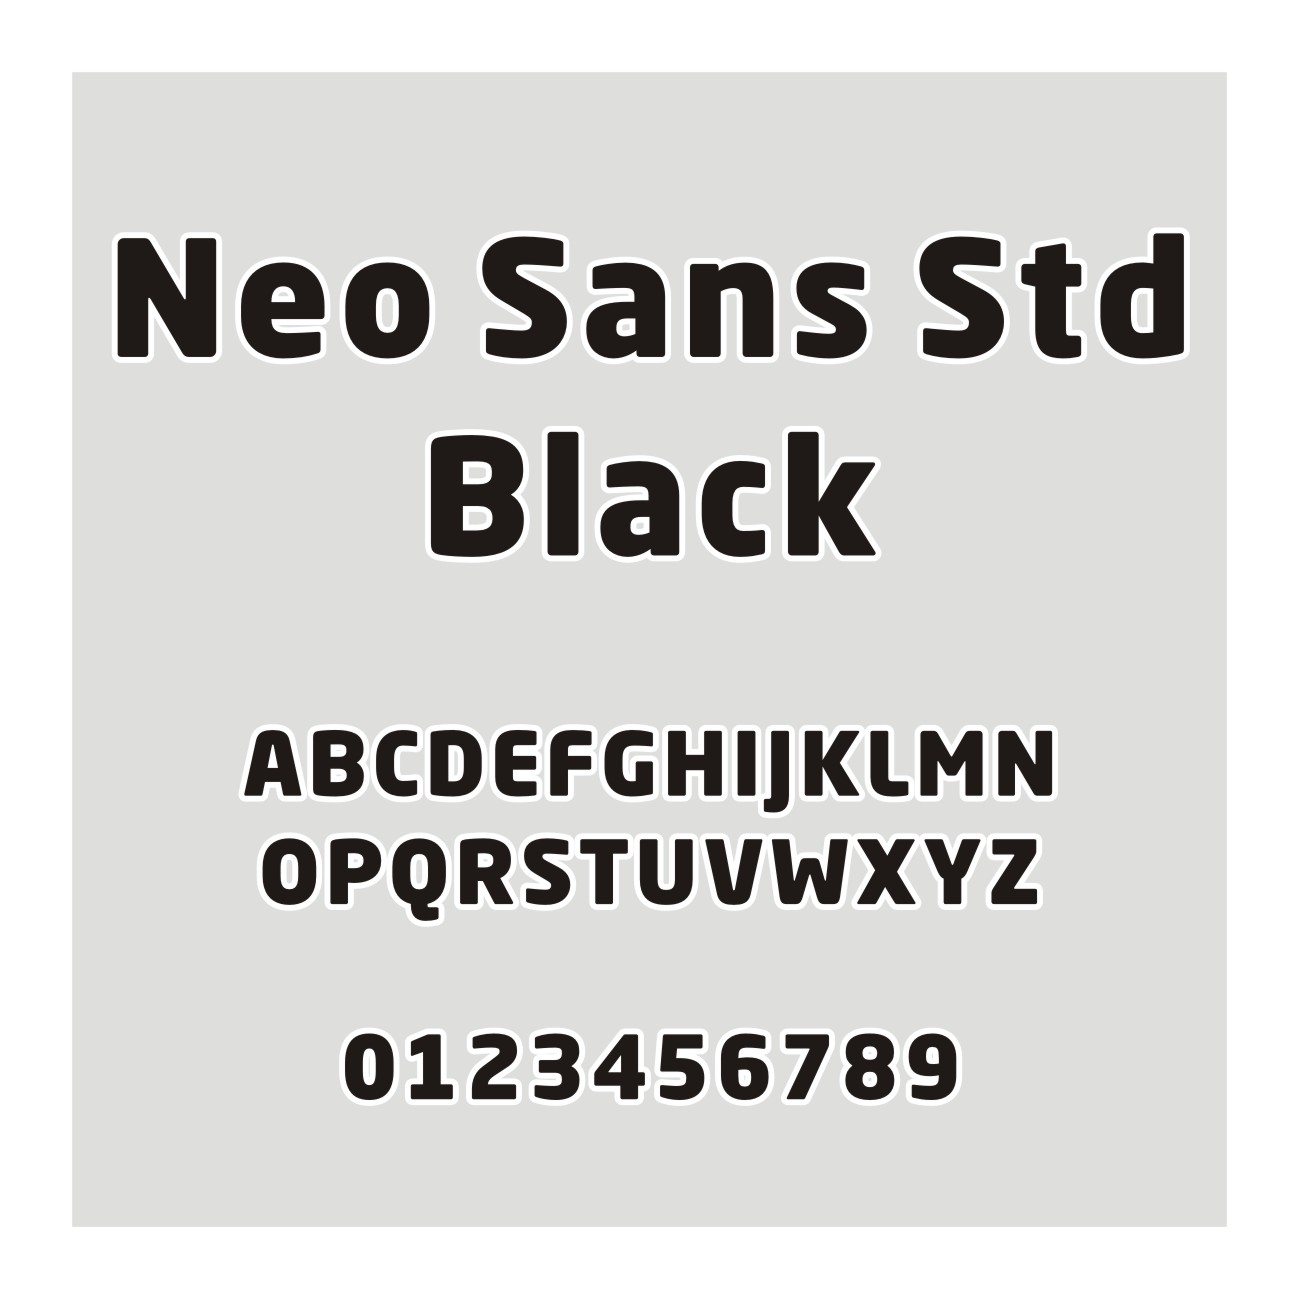 Neo Sans Std Black